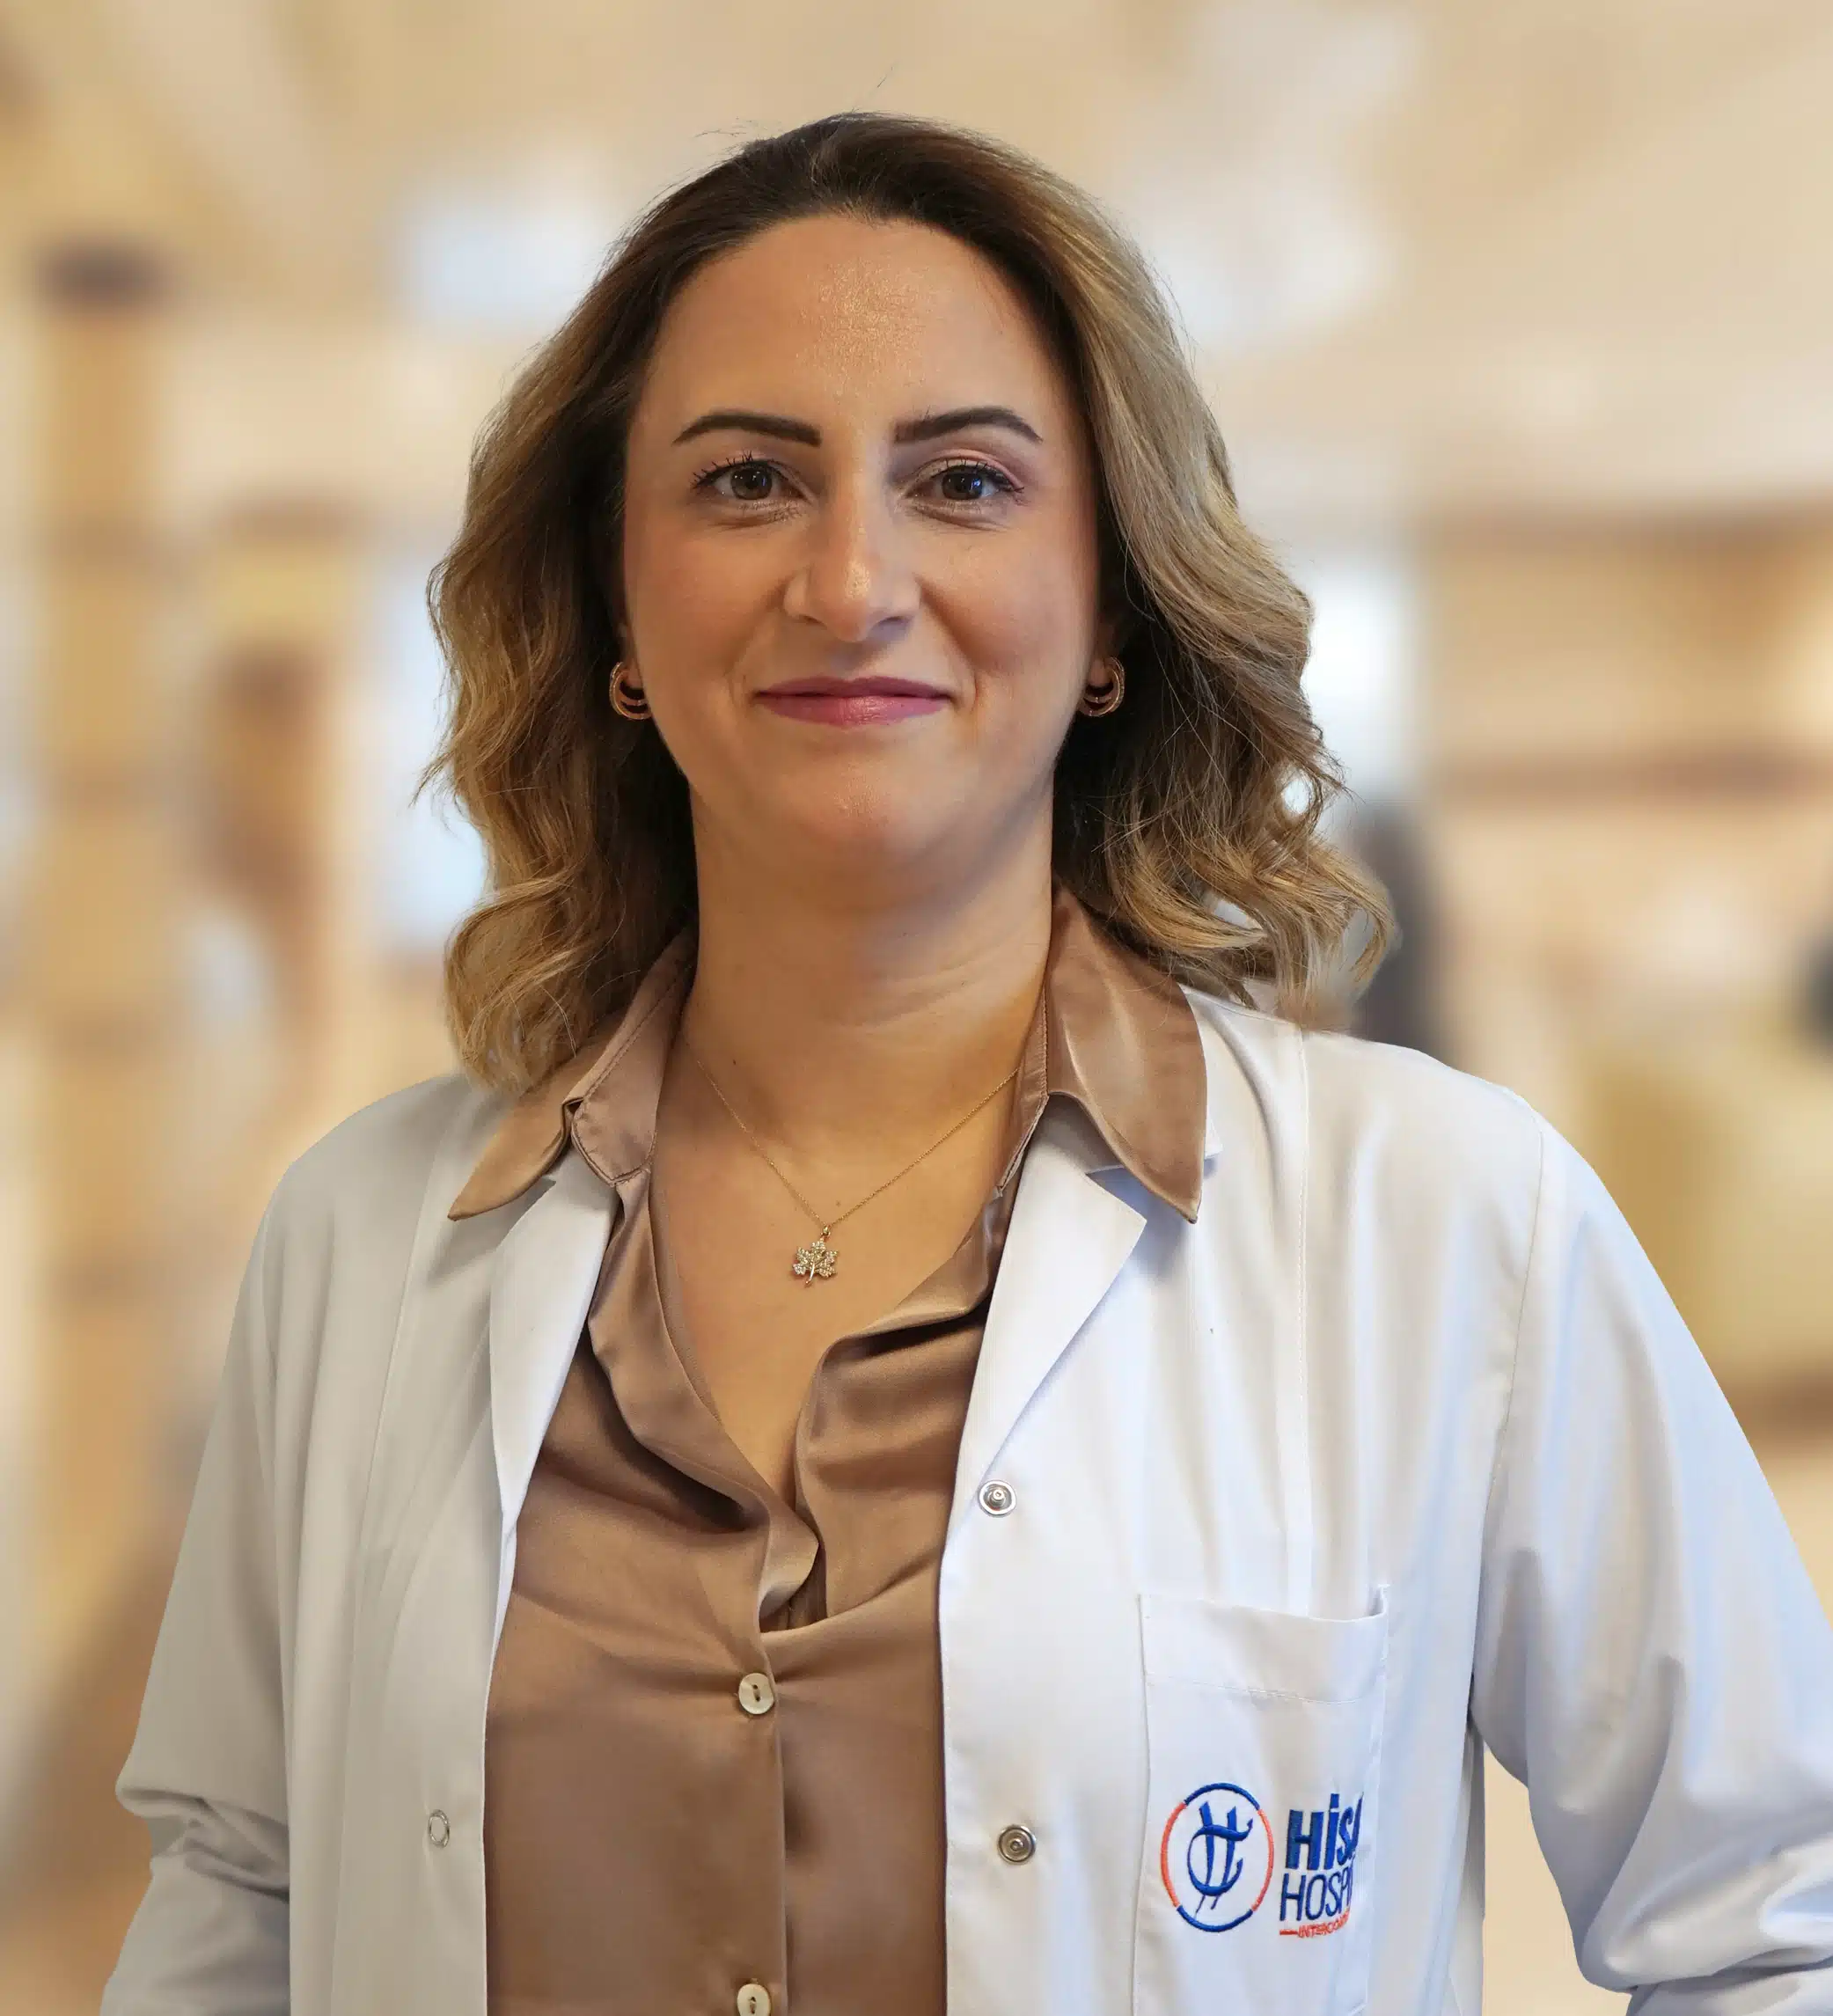 Doc Dr Meryem Kurek Eken